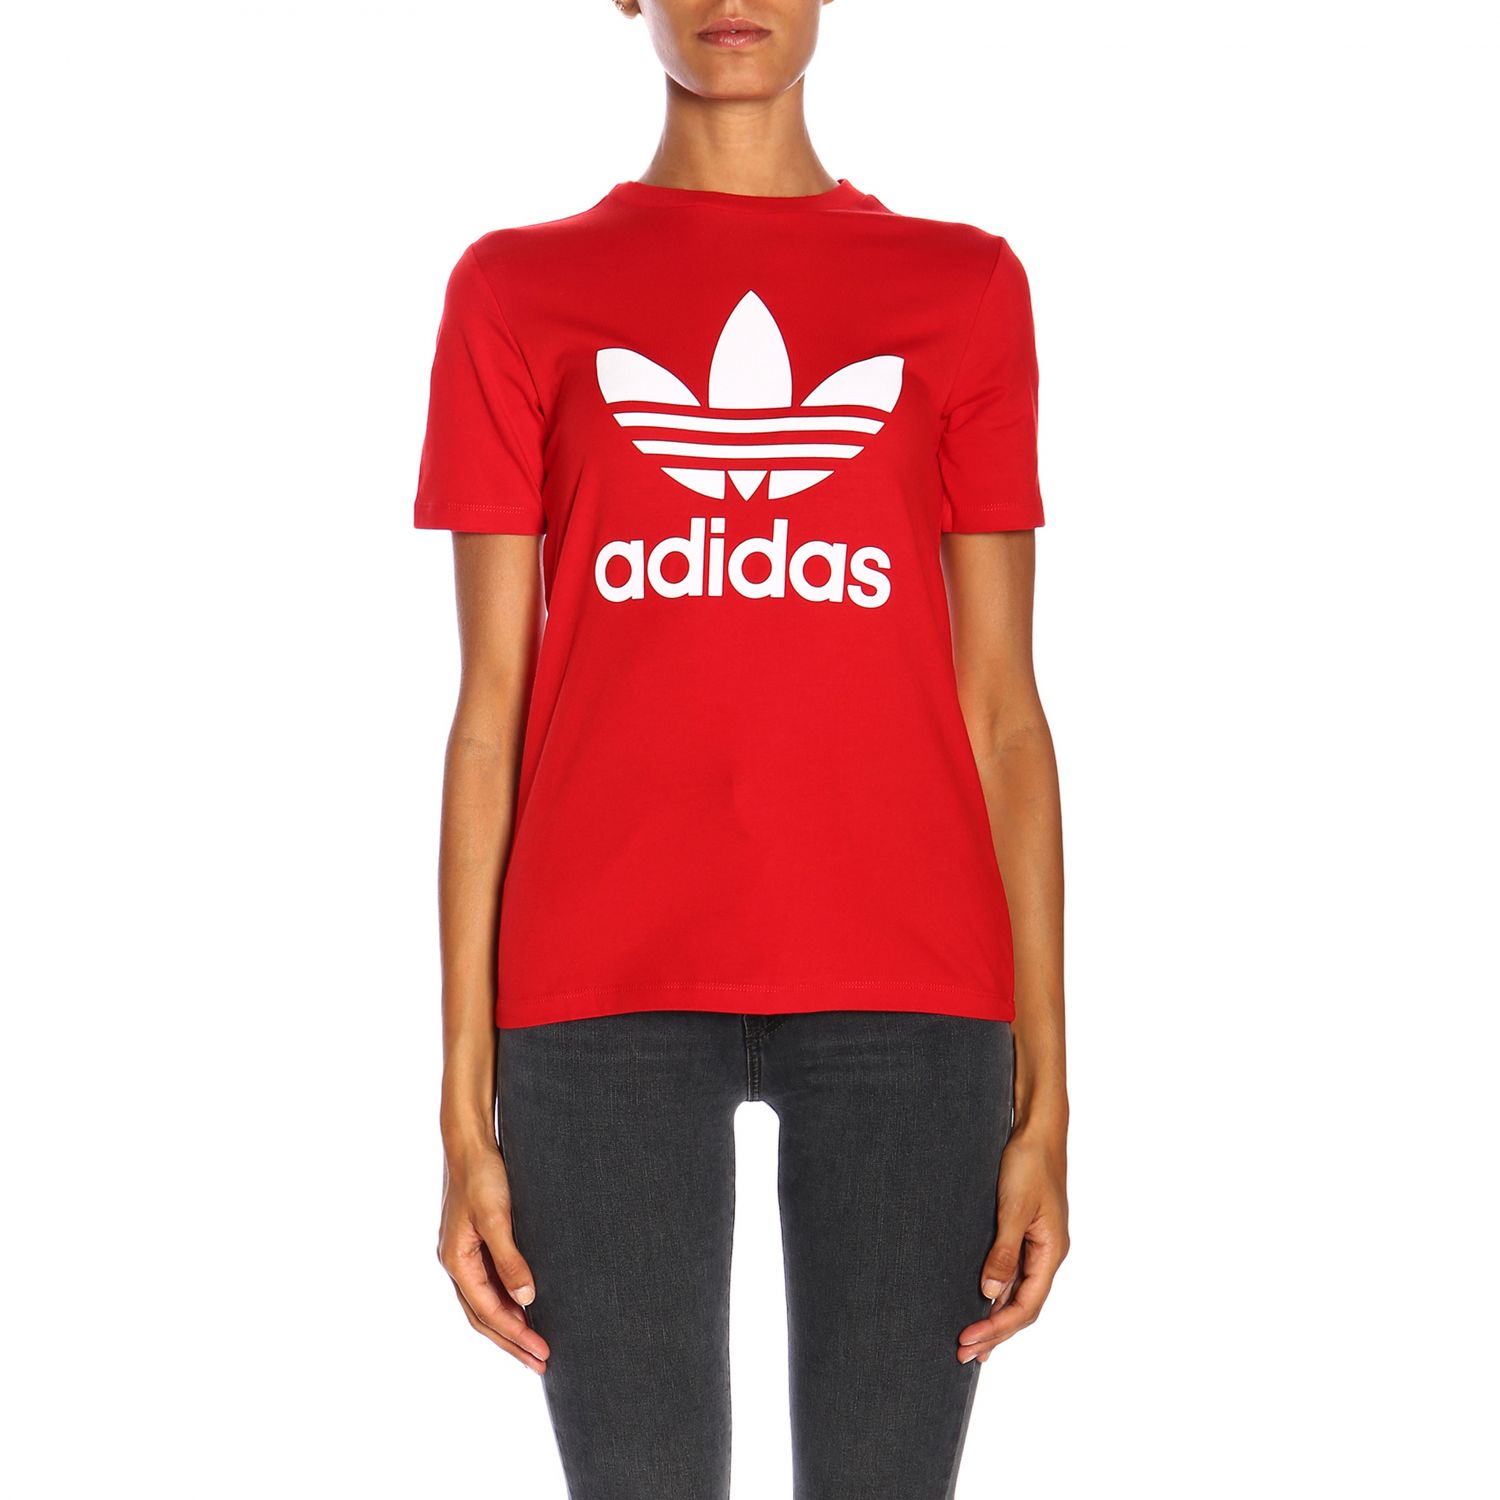 Adidas Originals Outlet: t-shirt for women - Red | Adidas Originals t ...